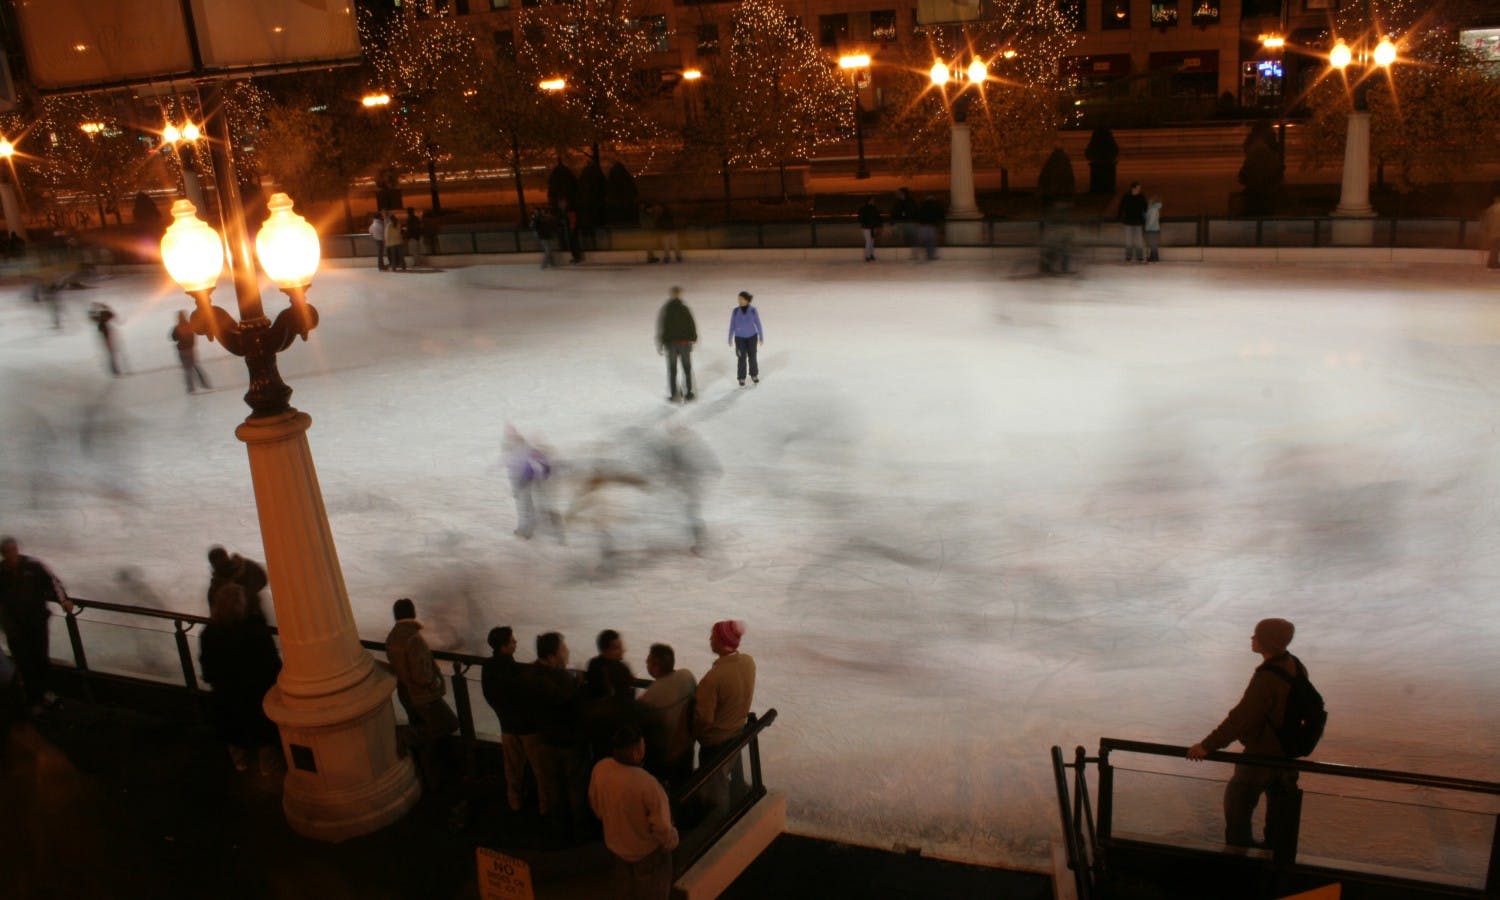 Millenium Park ice skating rink